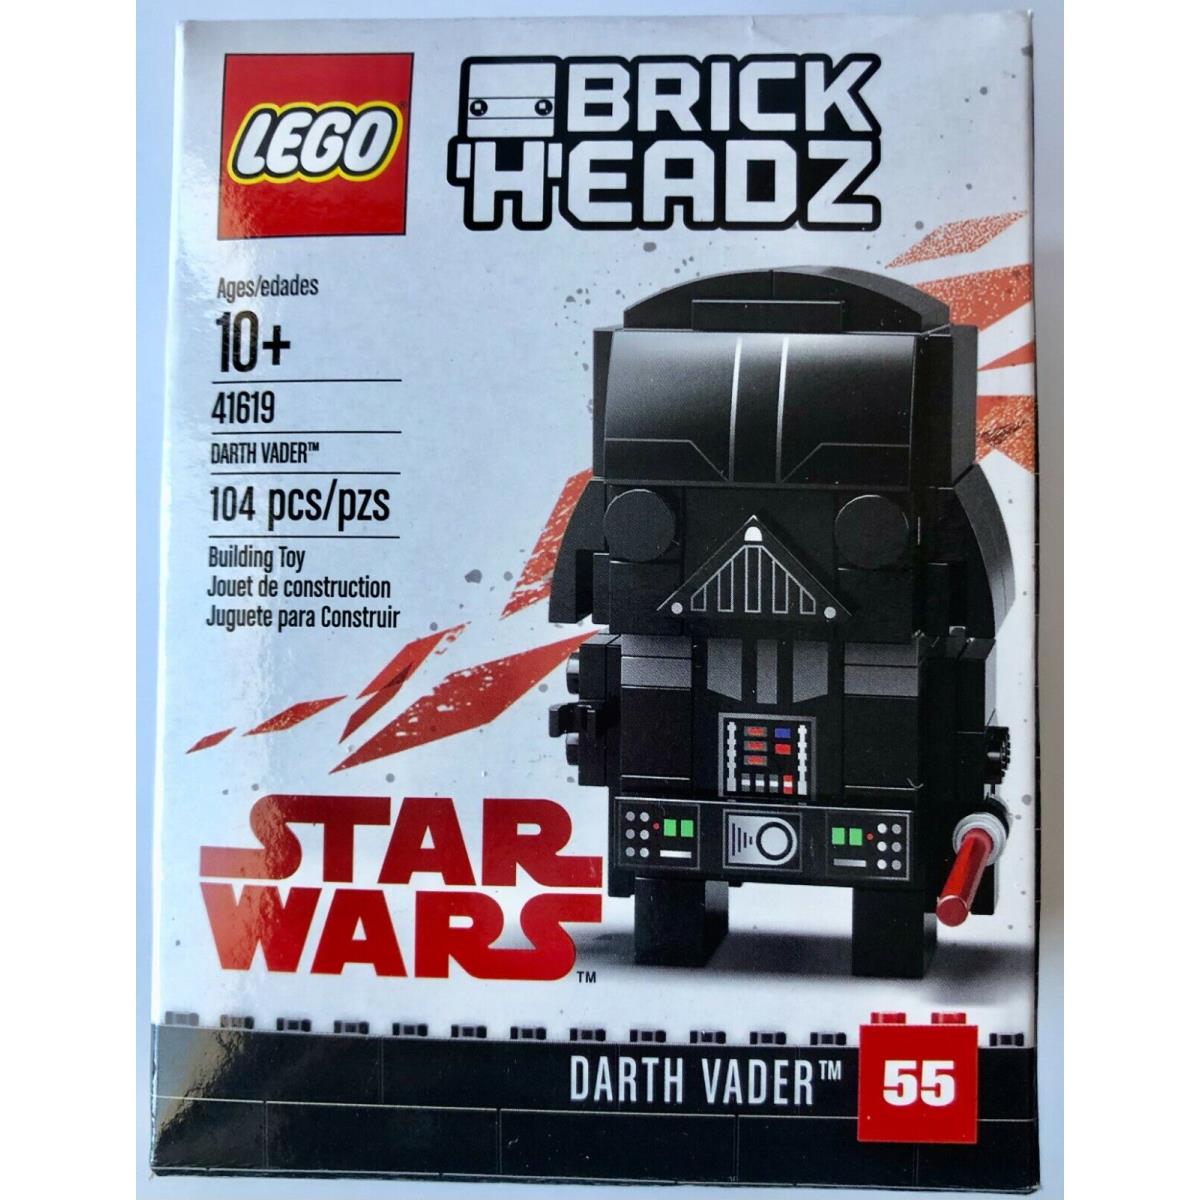 Lego Brickheadz Darth Vader Set 41619